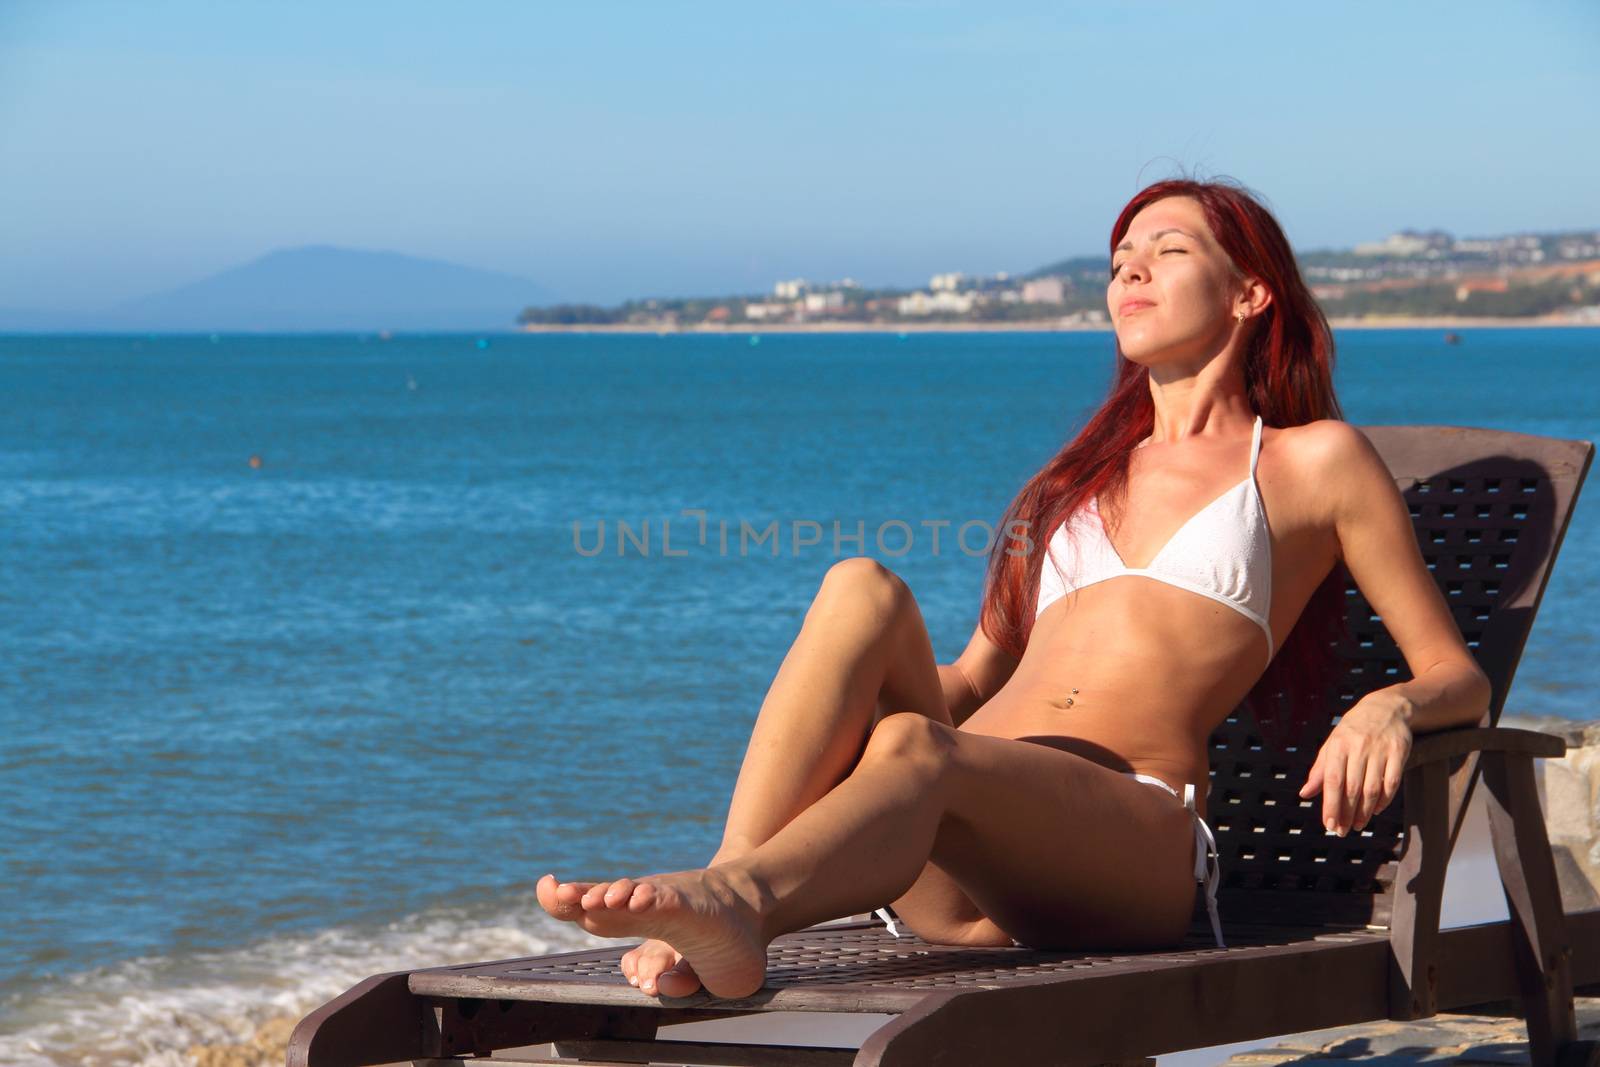 Woman rest on the beach by destillat